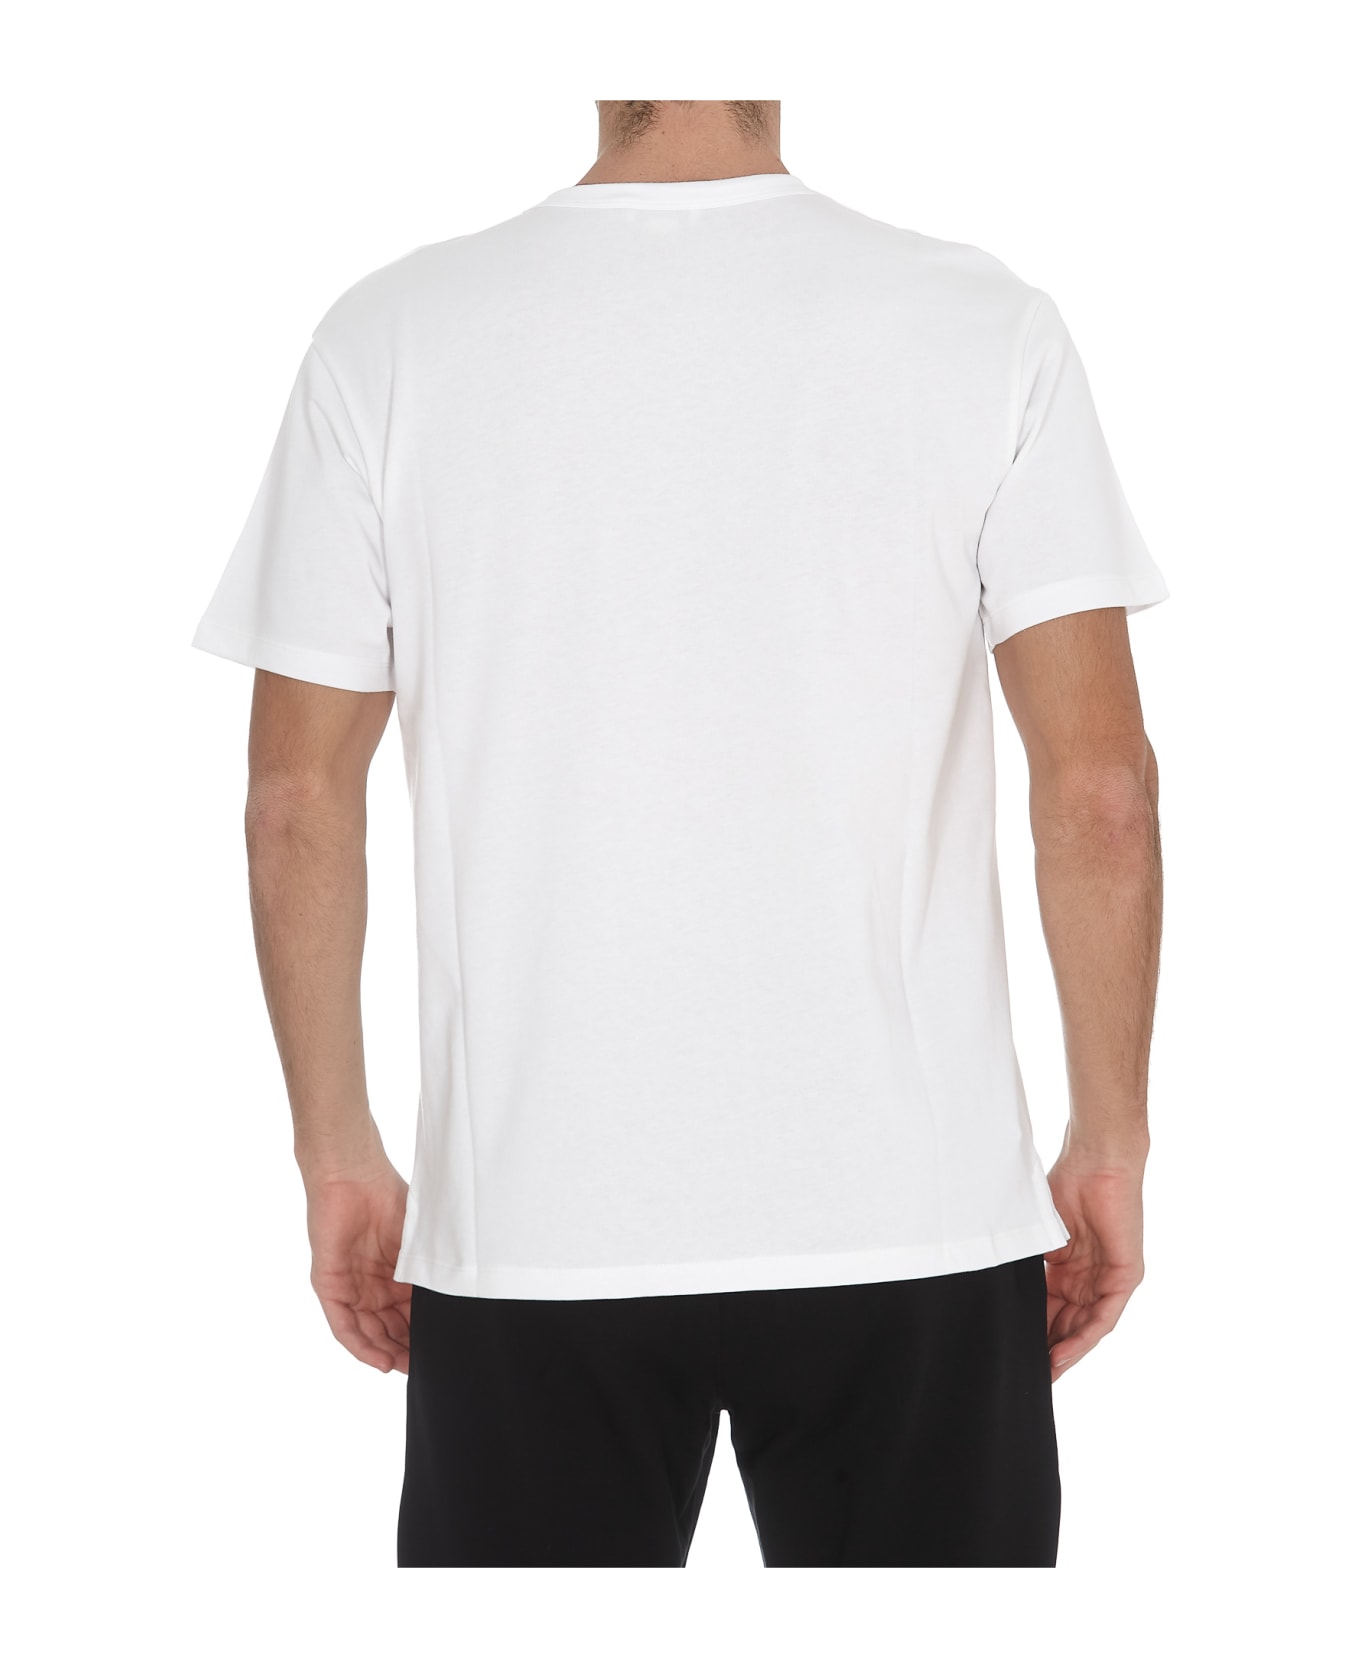 Alexander McQueen Skeleton T-shirt - Bianco